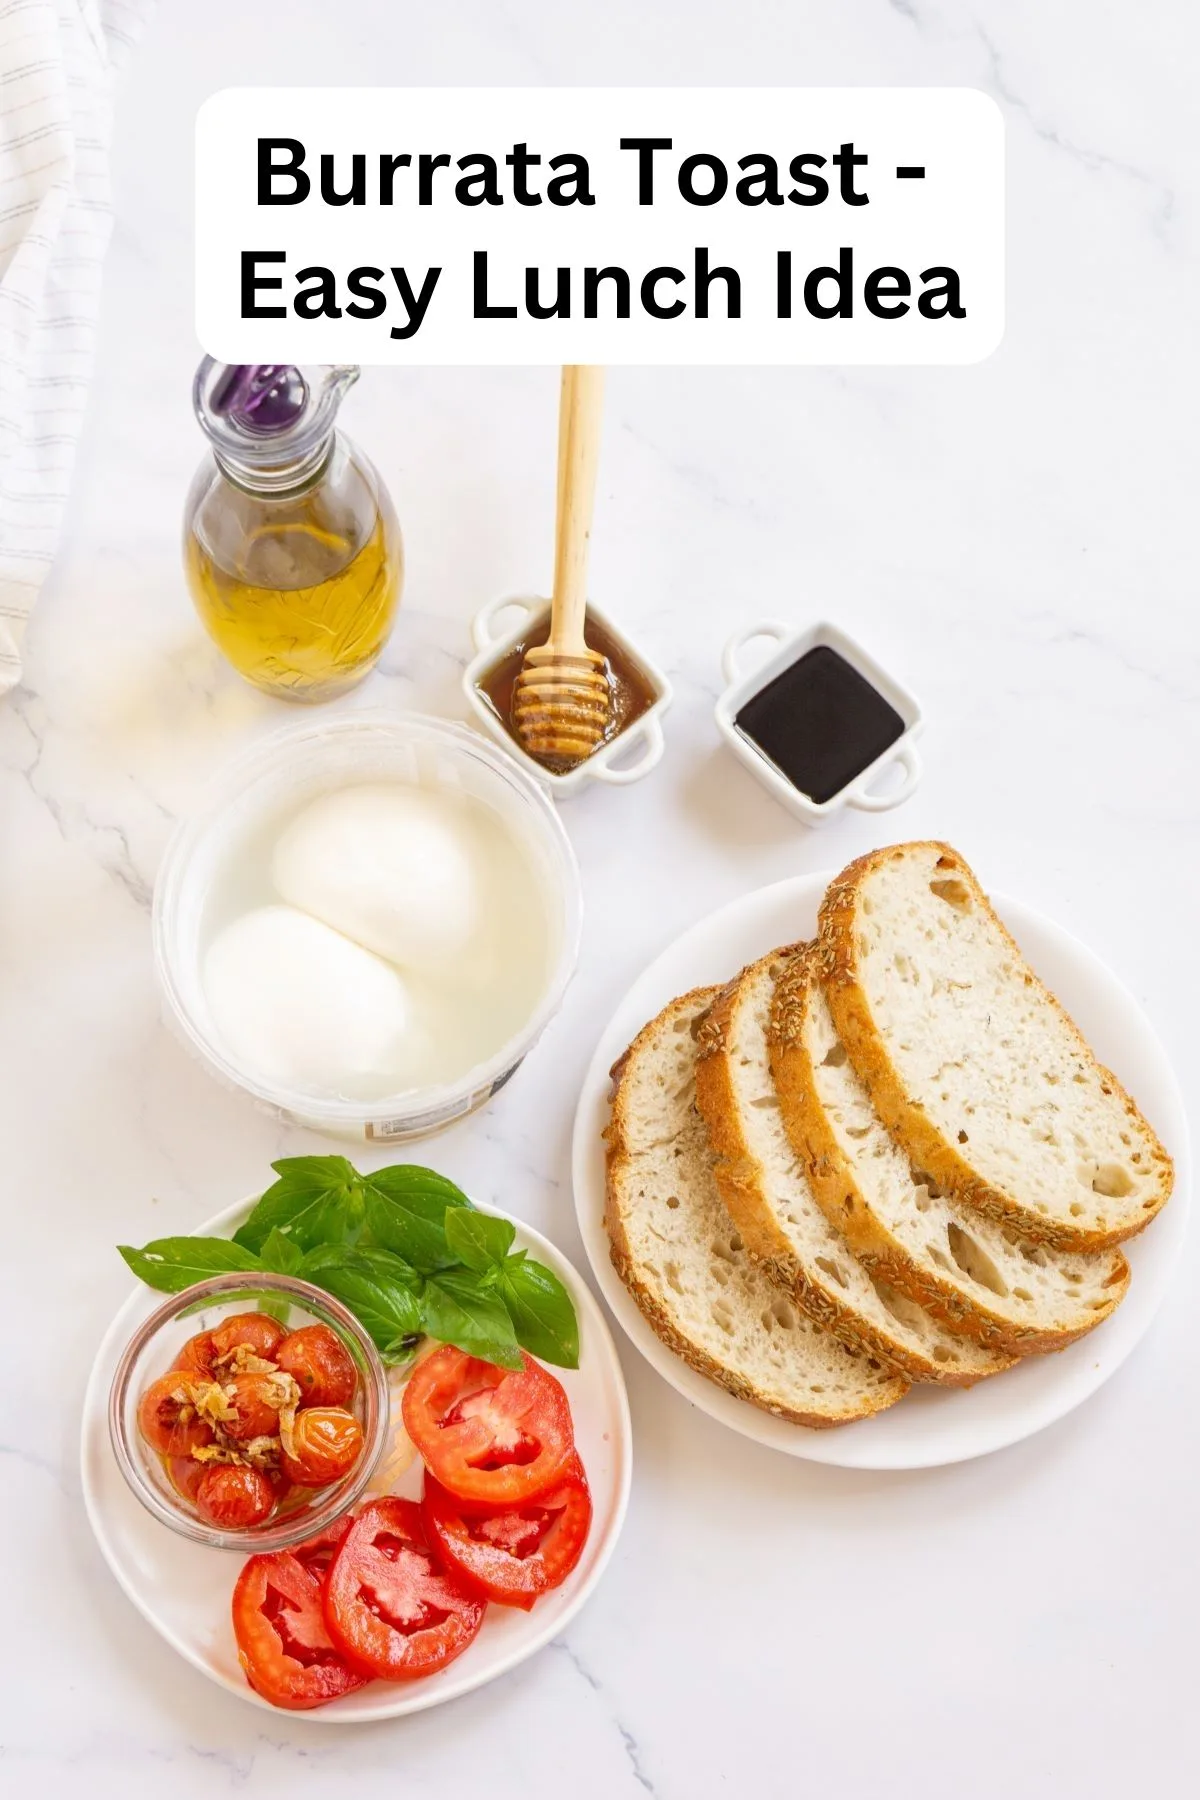 Ingredients for burrata toast